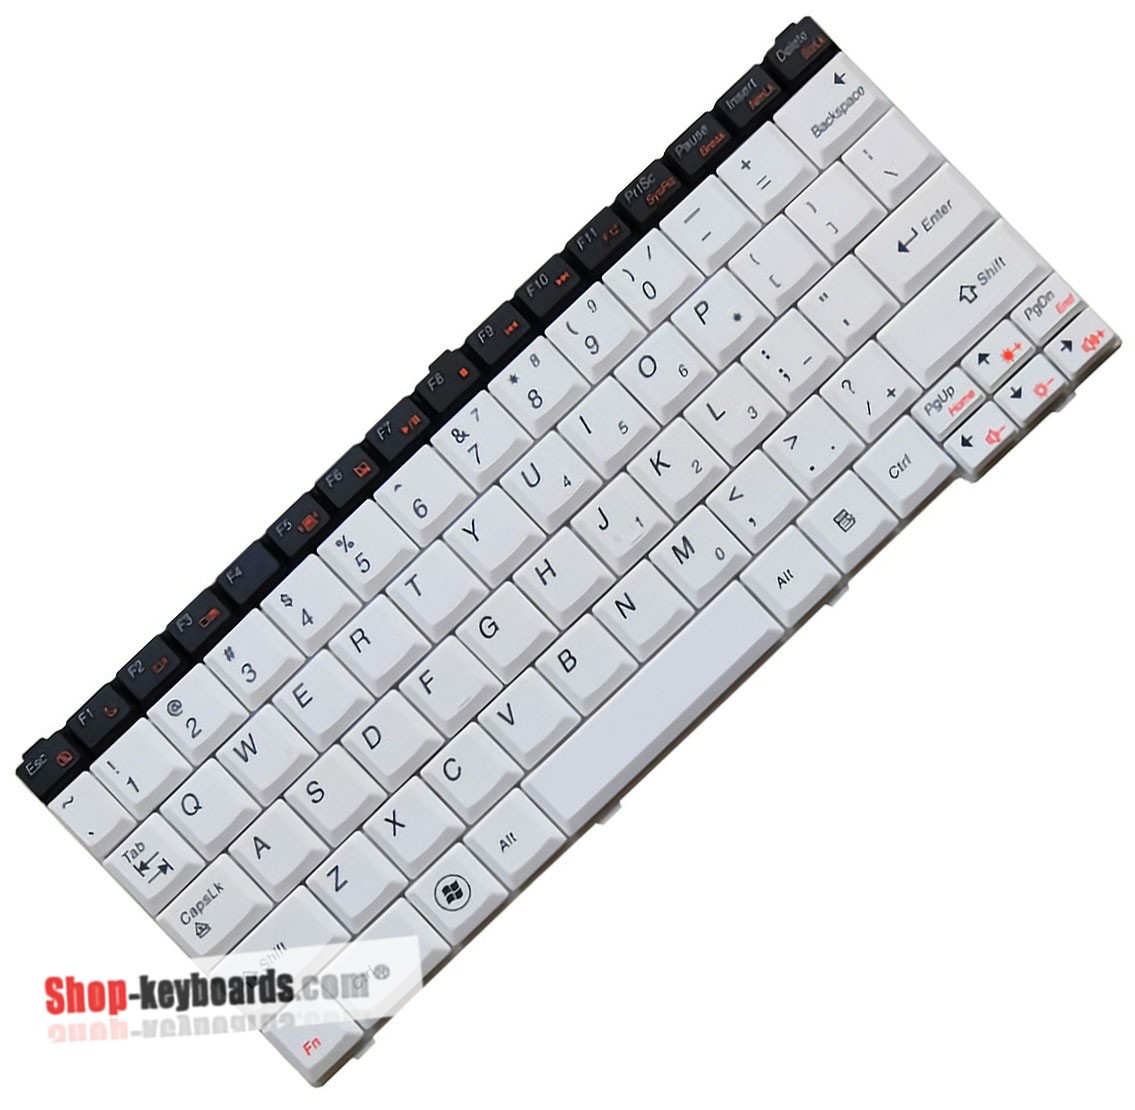 Lenovo IdeaPad U110 Keyboard replacement